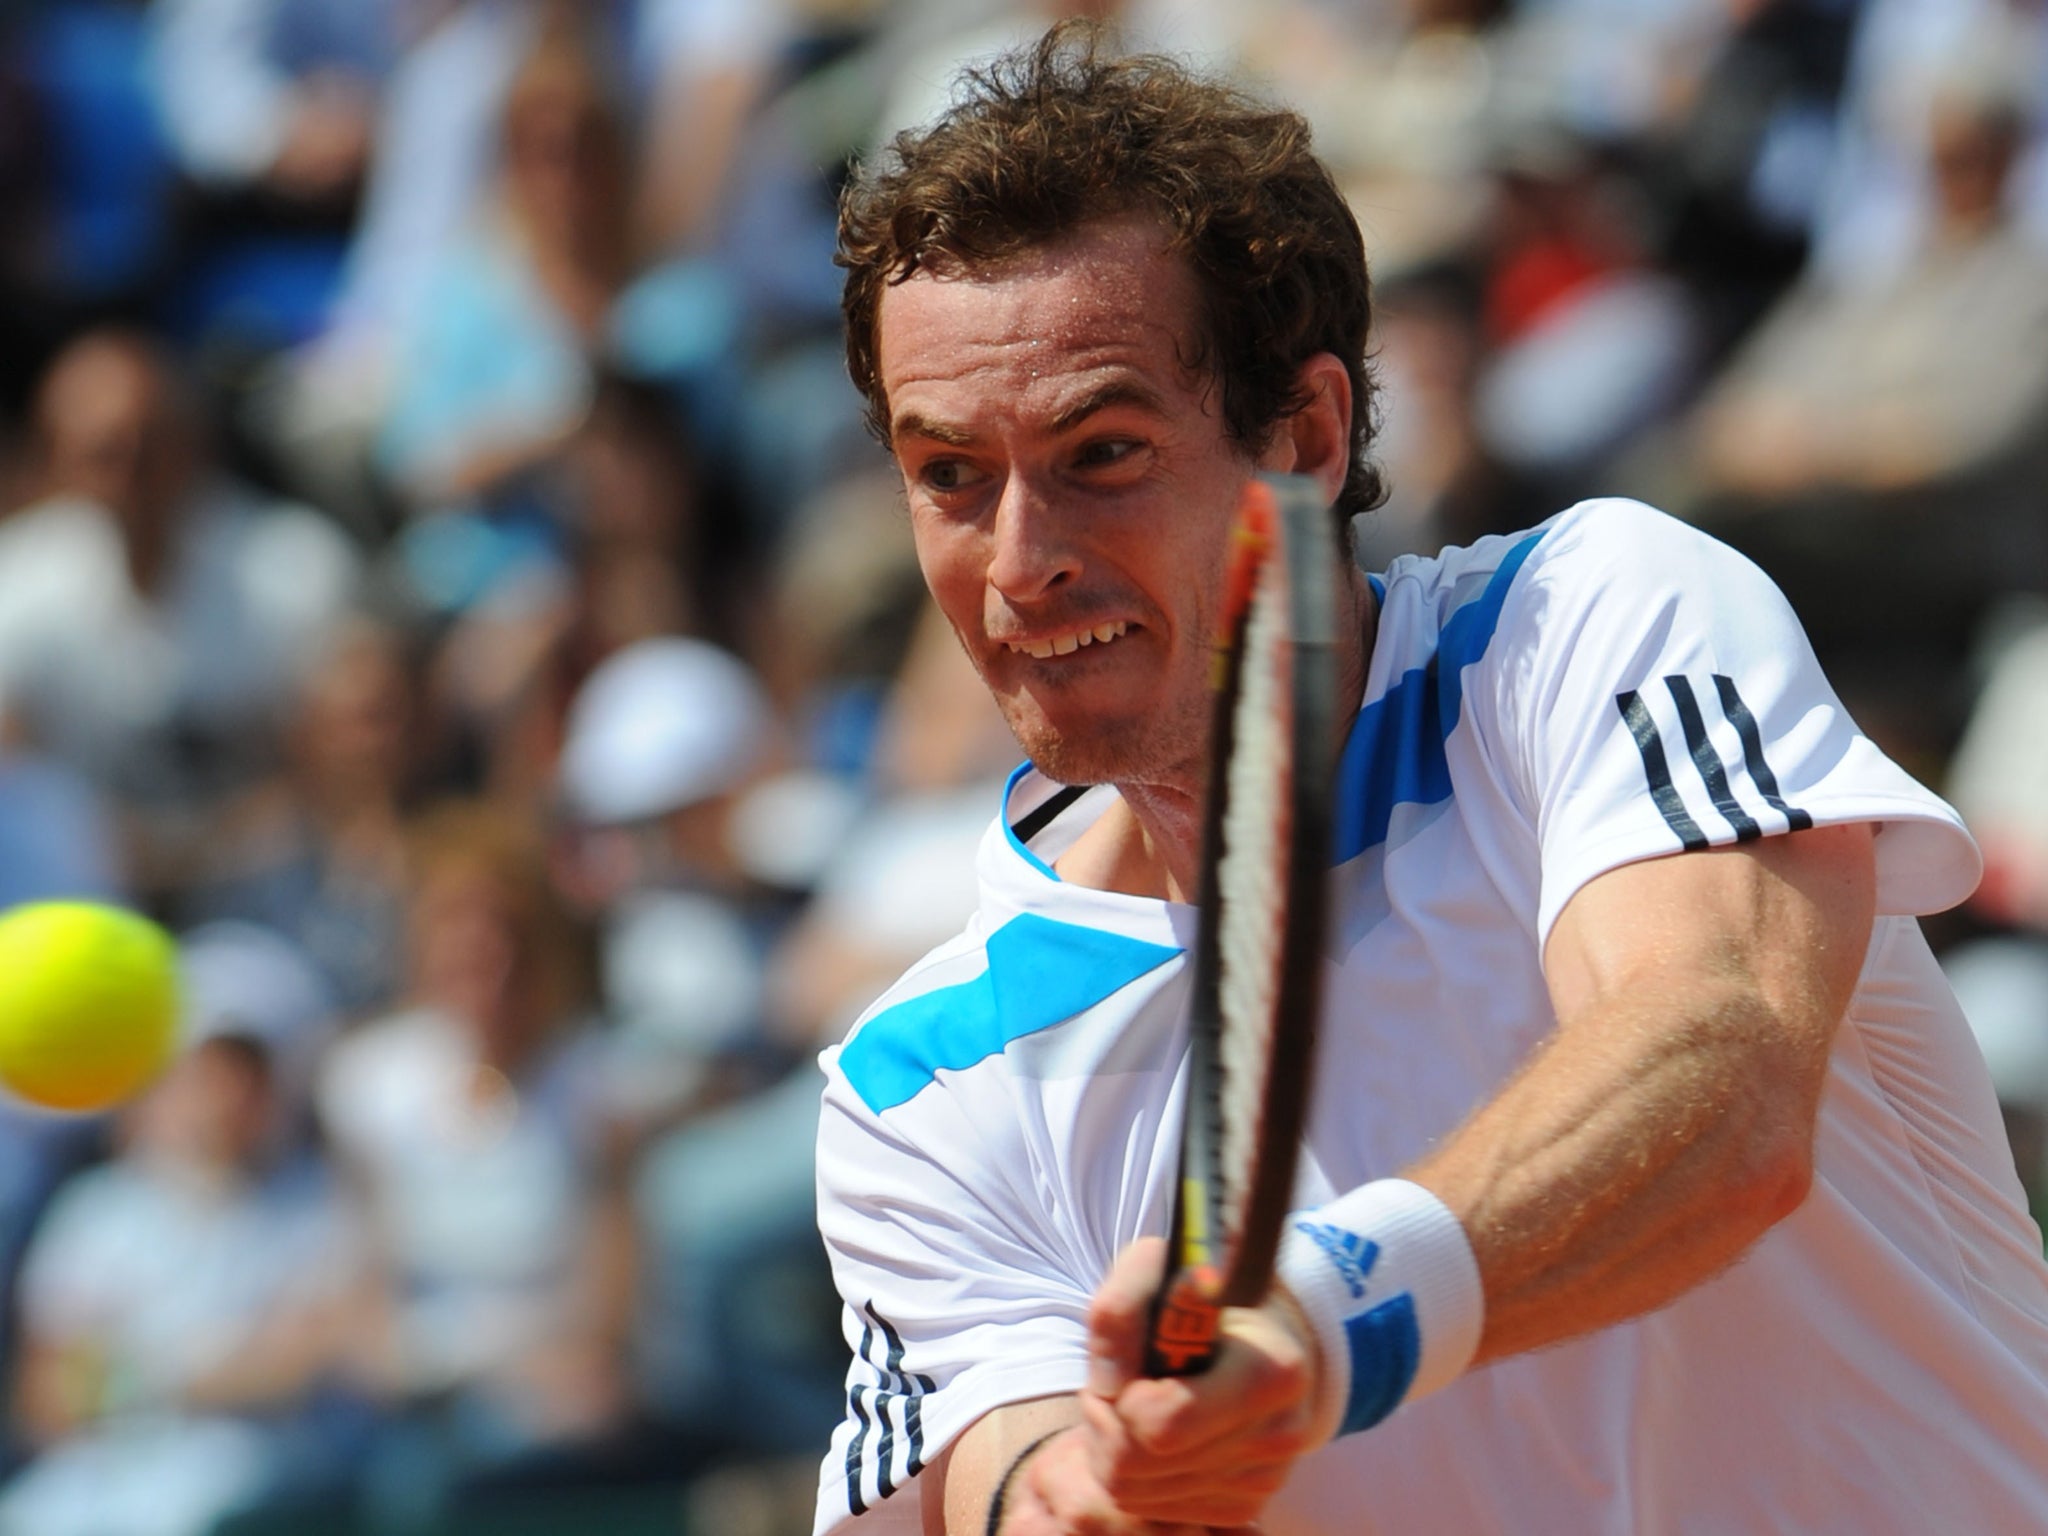 Andy Murray lost the Davis Cup singles tie to Fabio Fognini